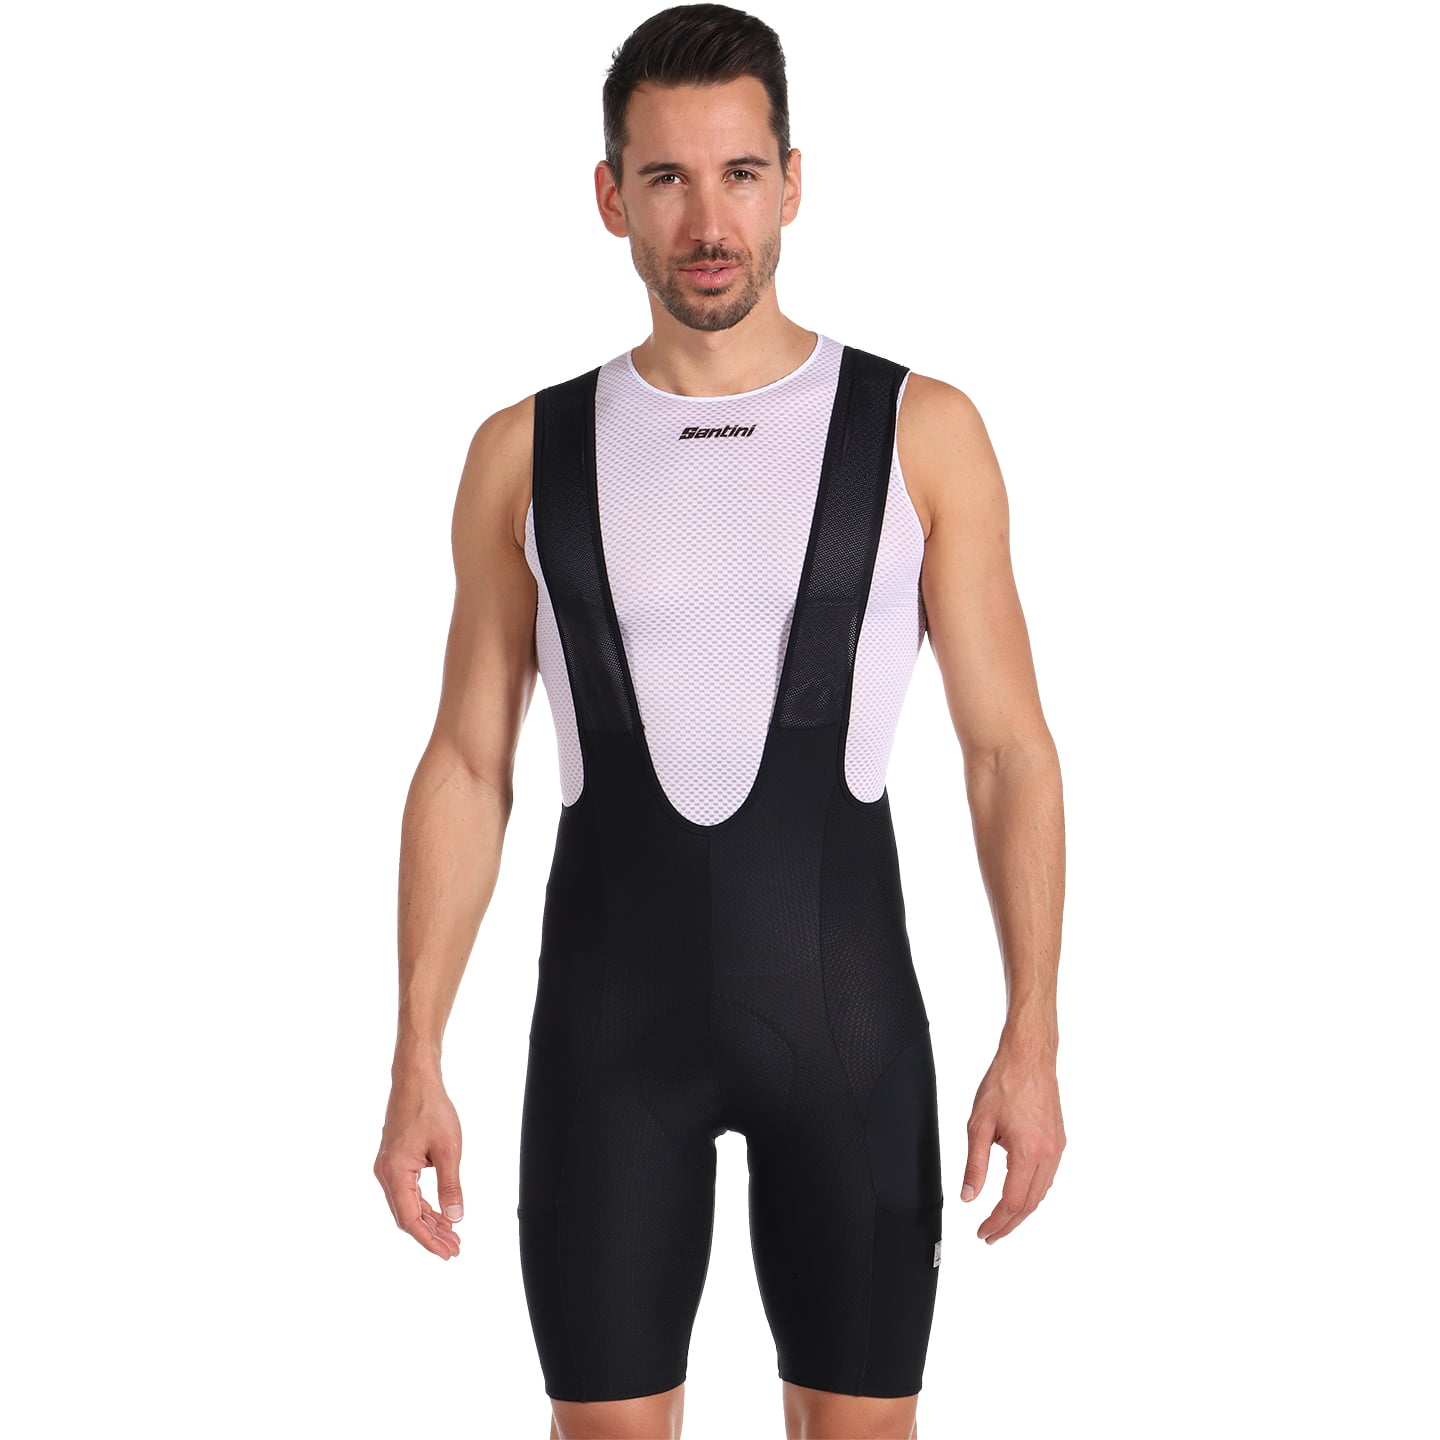 SANTINI Air Pro Gel 2 Gravel Bib Shorts Bib Shorts, for men, size M, Cycle shorts, Cycling clothing